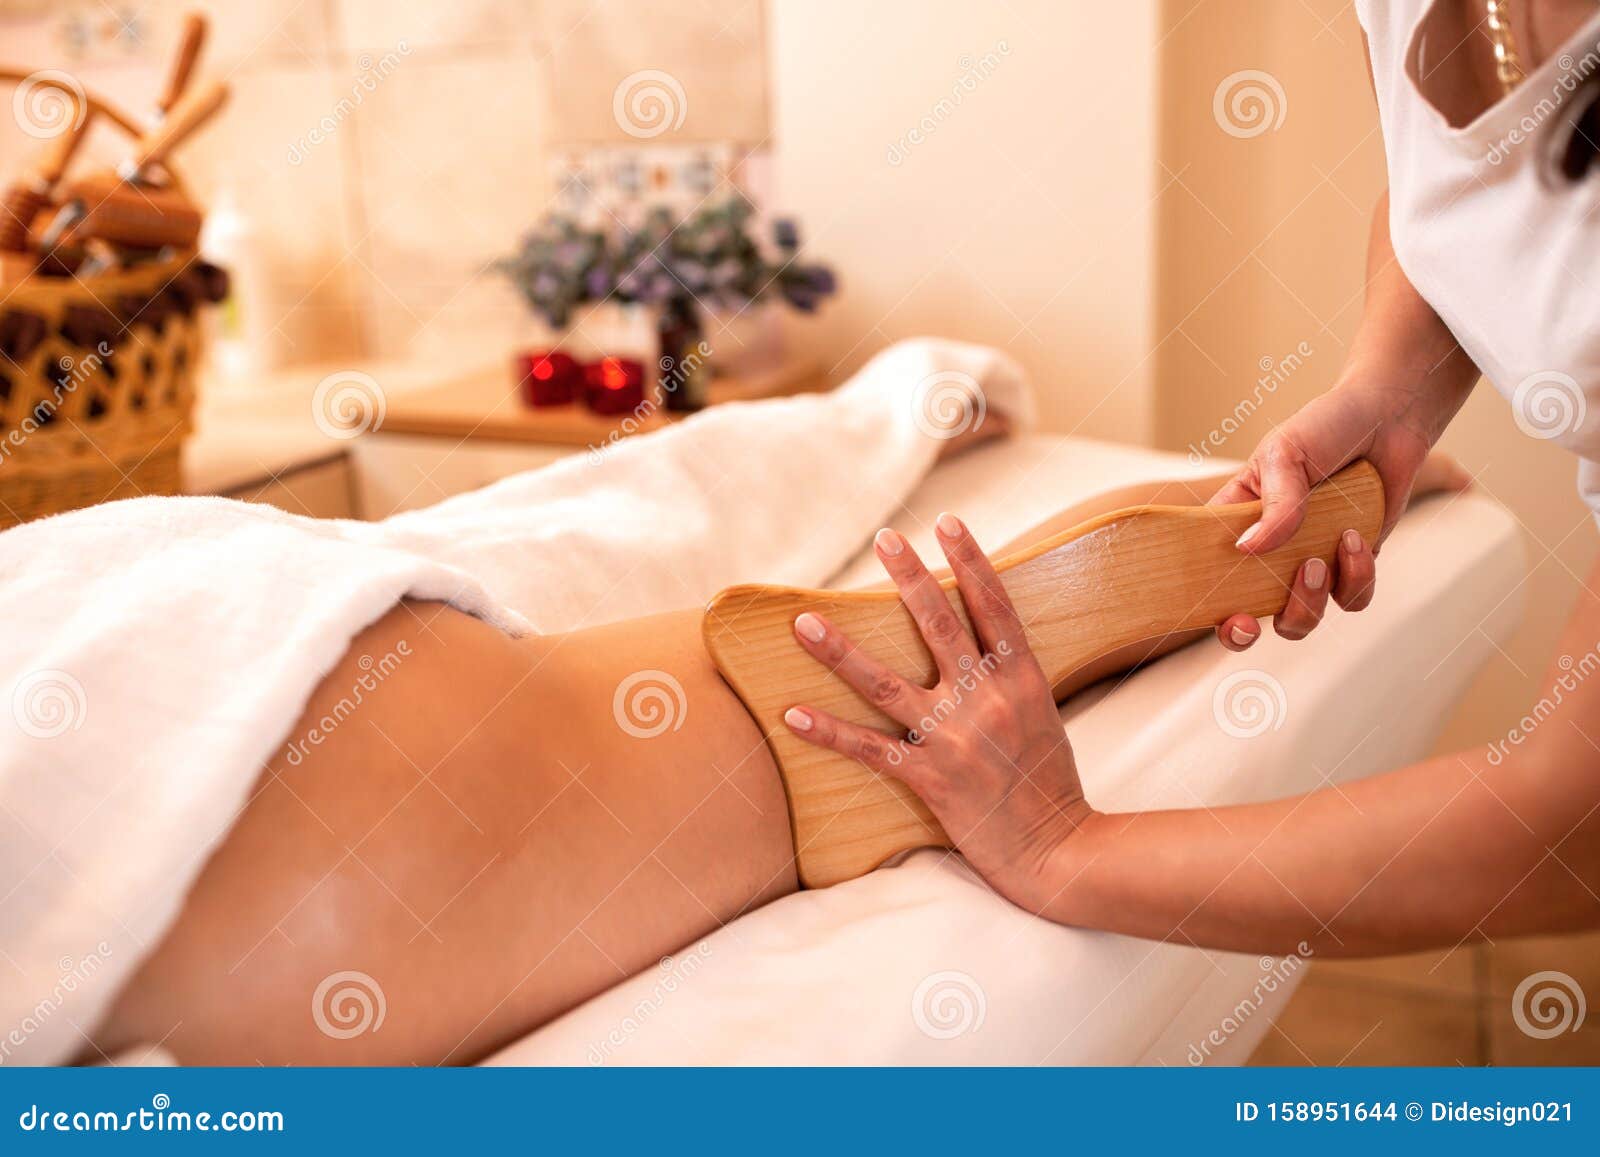 masseuse holding a hand held wooden massage tool